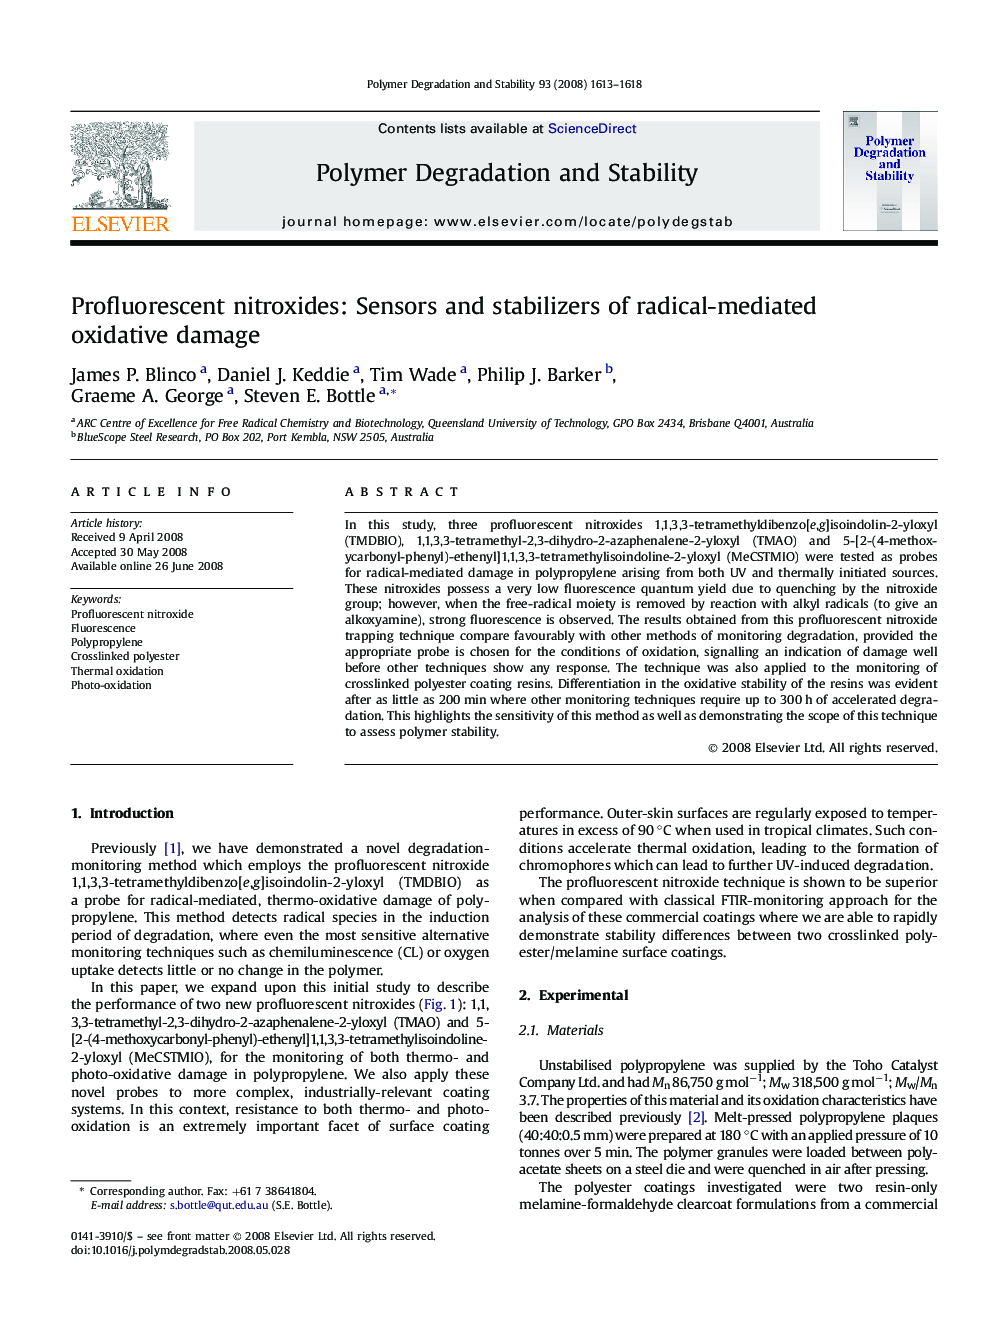 Profluorescent nitroxides: Sensors and stabilizers of radical-mediated oxidative damage